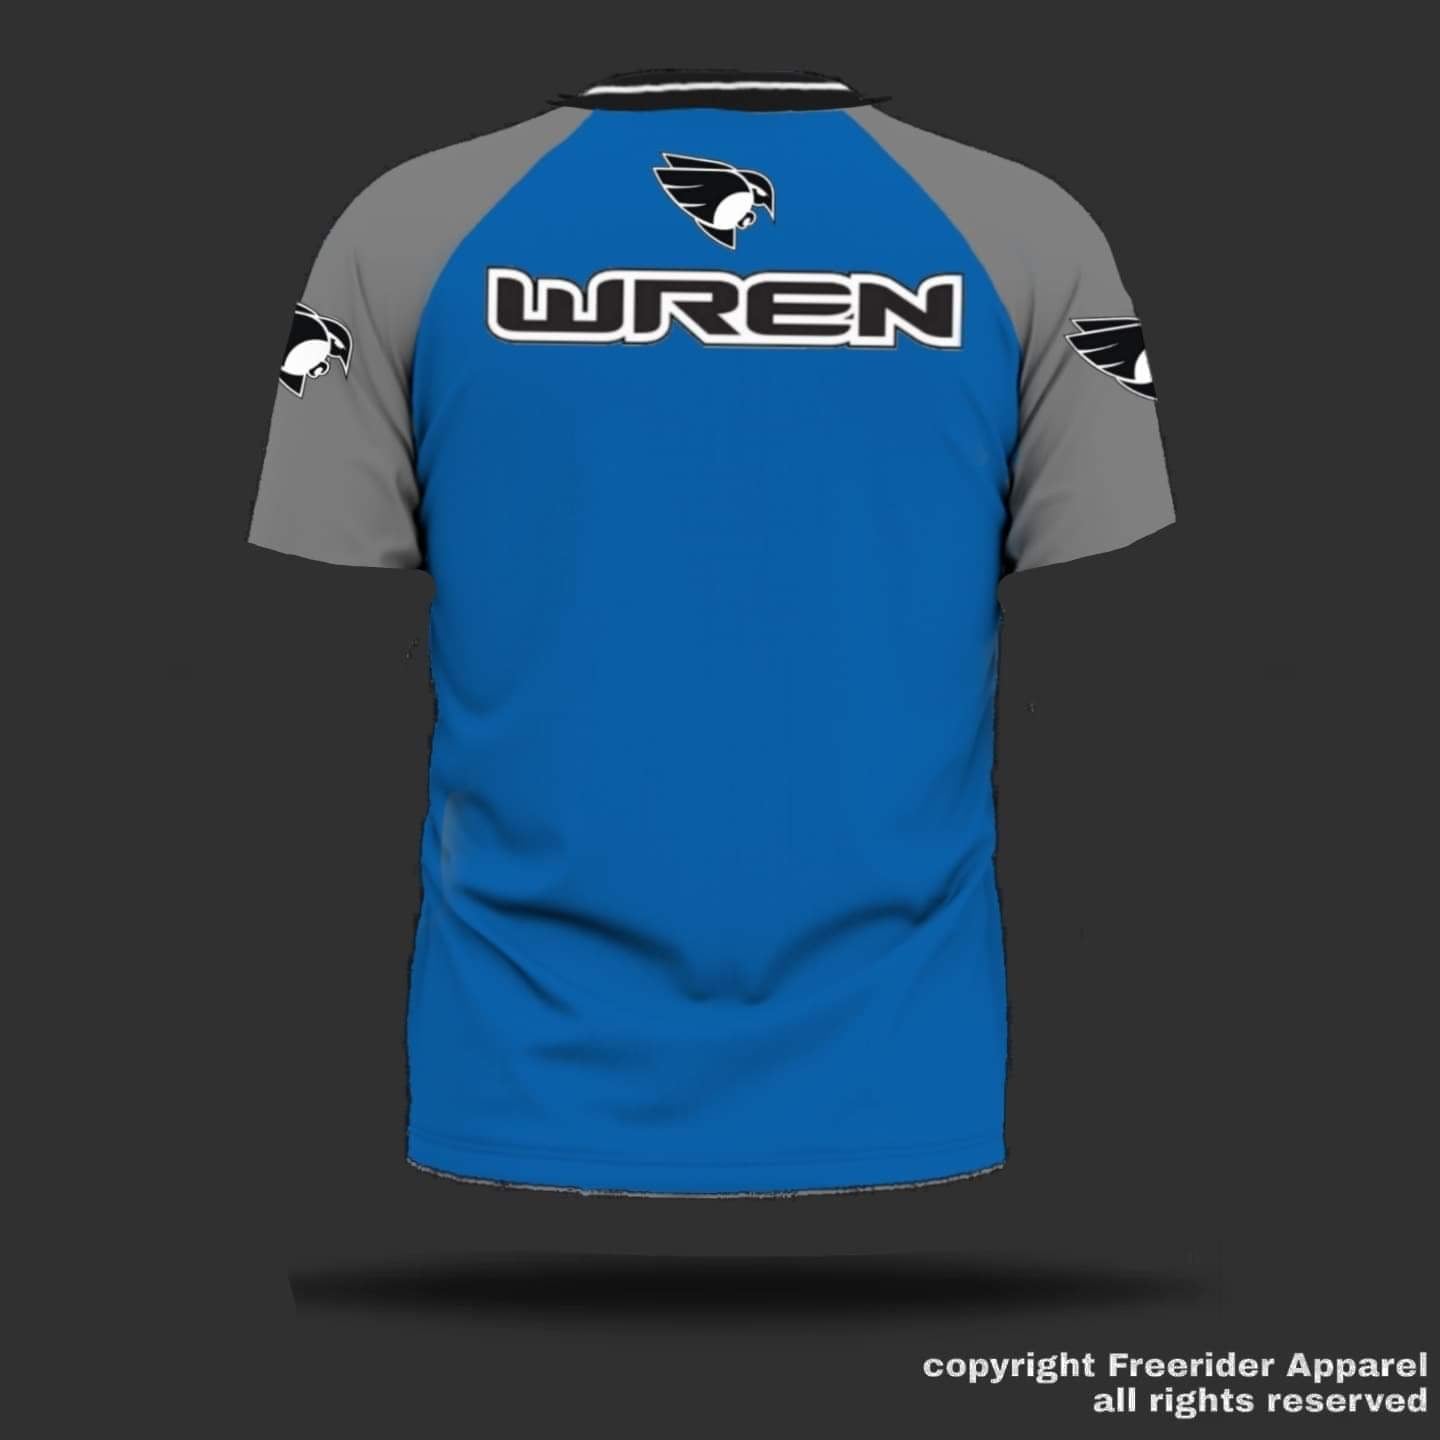 WREN Women's Short Sleeve Jersey - Blue/Grey Raglan